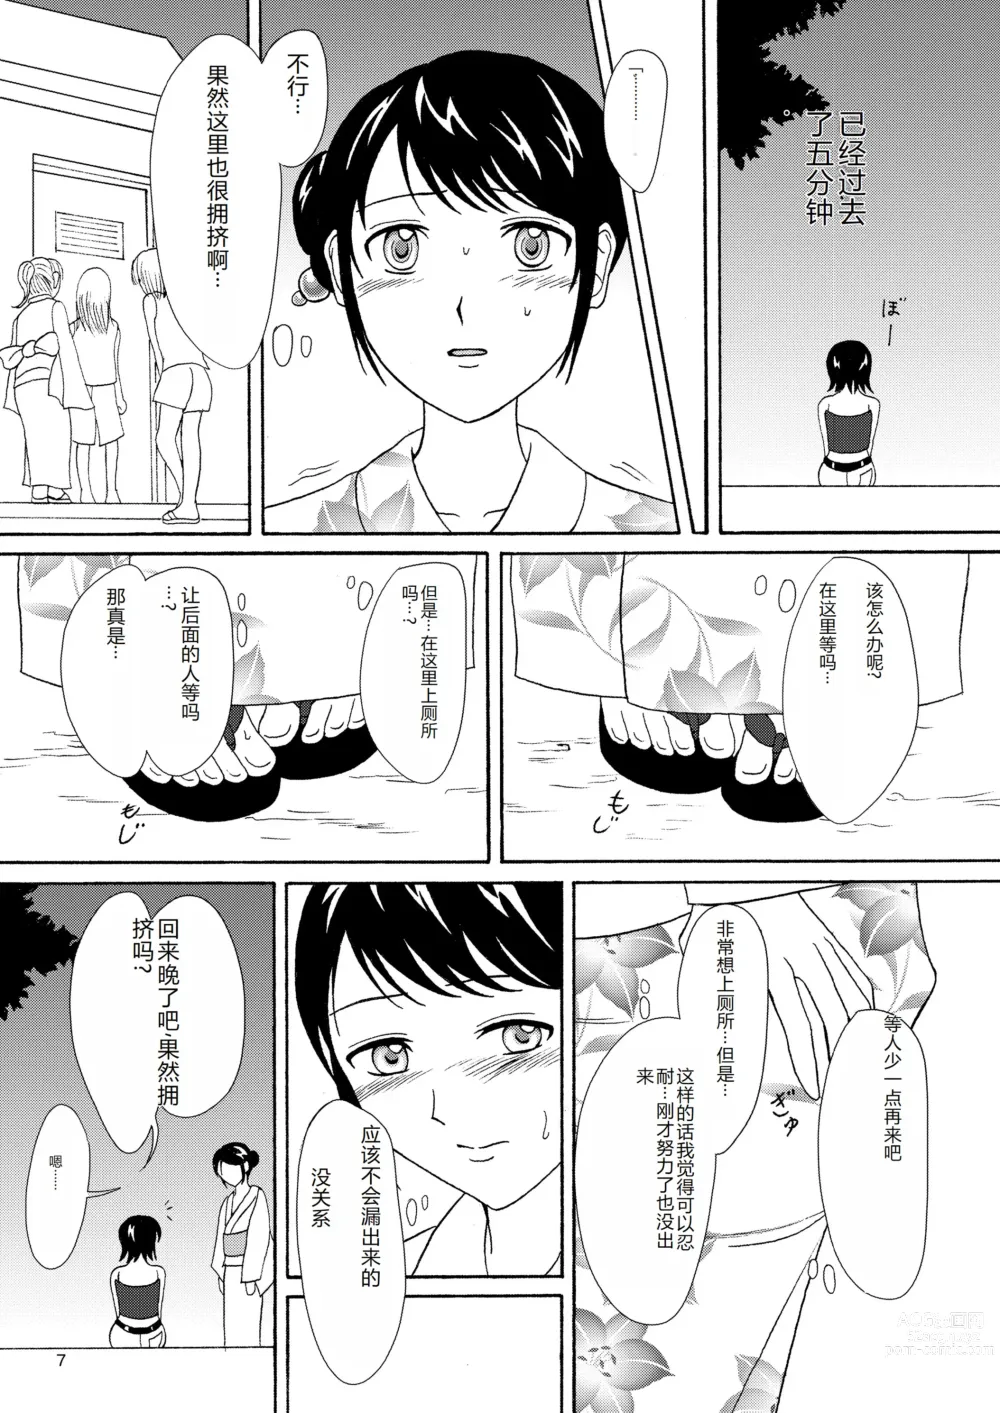 Page 6 of doujinshi Natsuben.